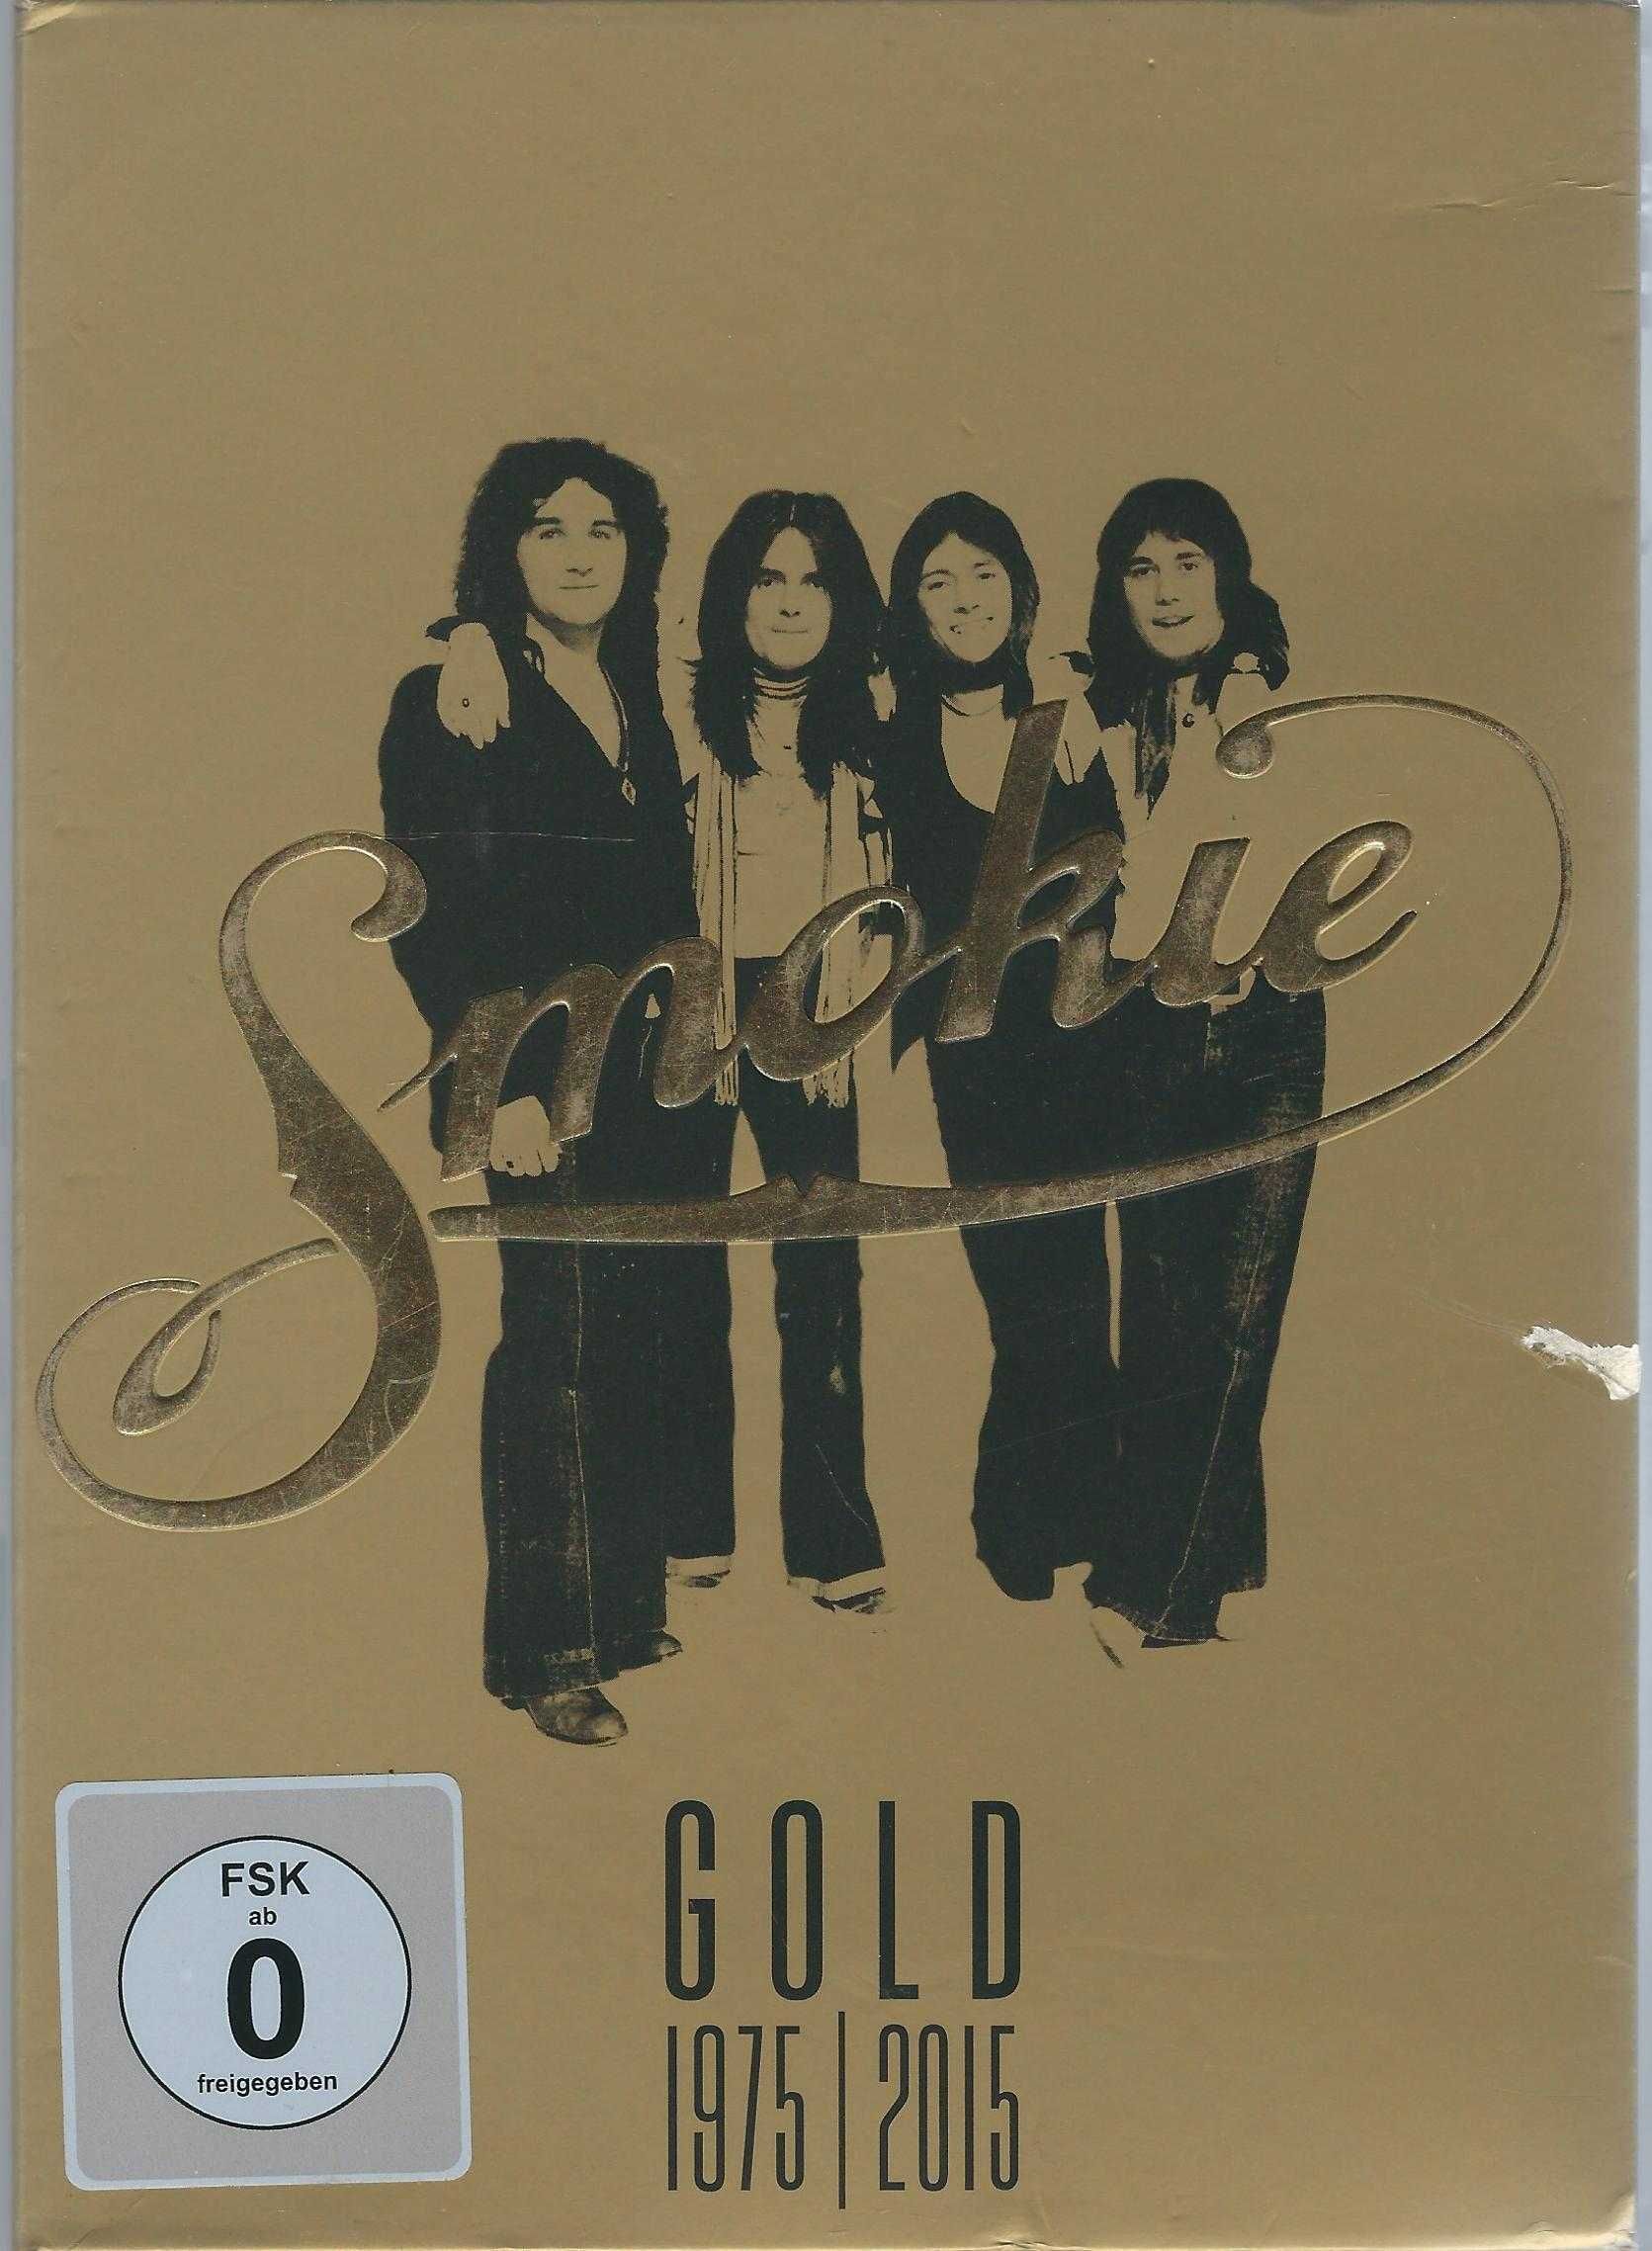 3 DVD Smokie - Gold 75-15 (2015) (Sony Music)